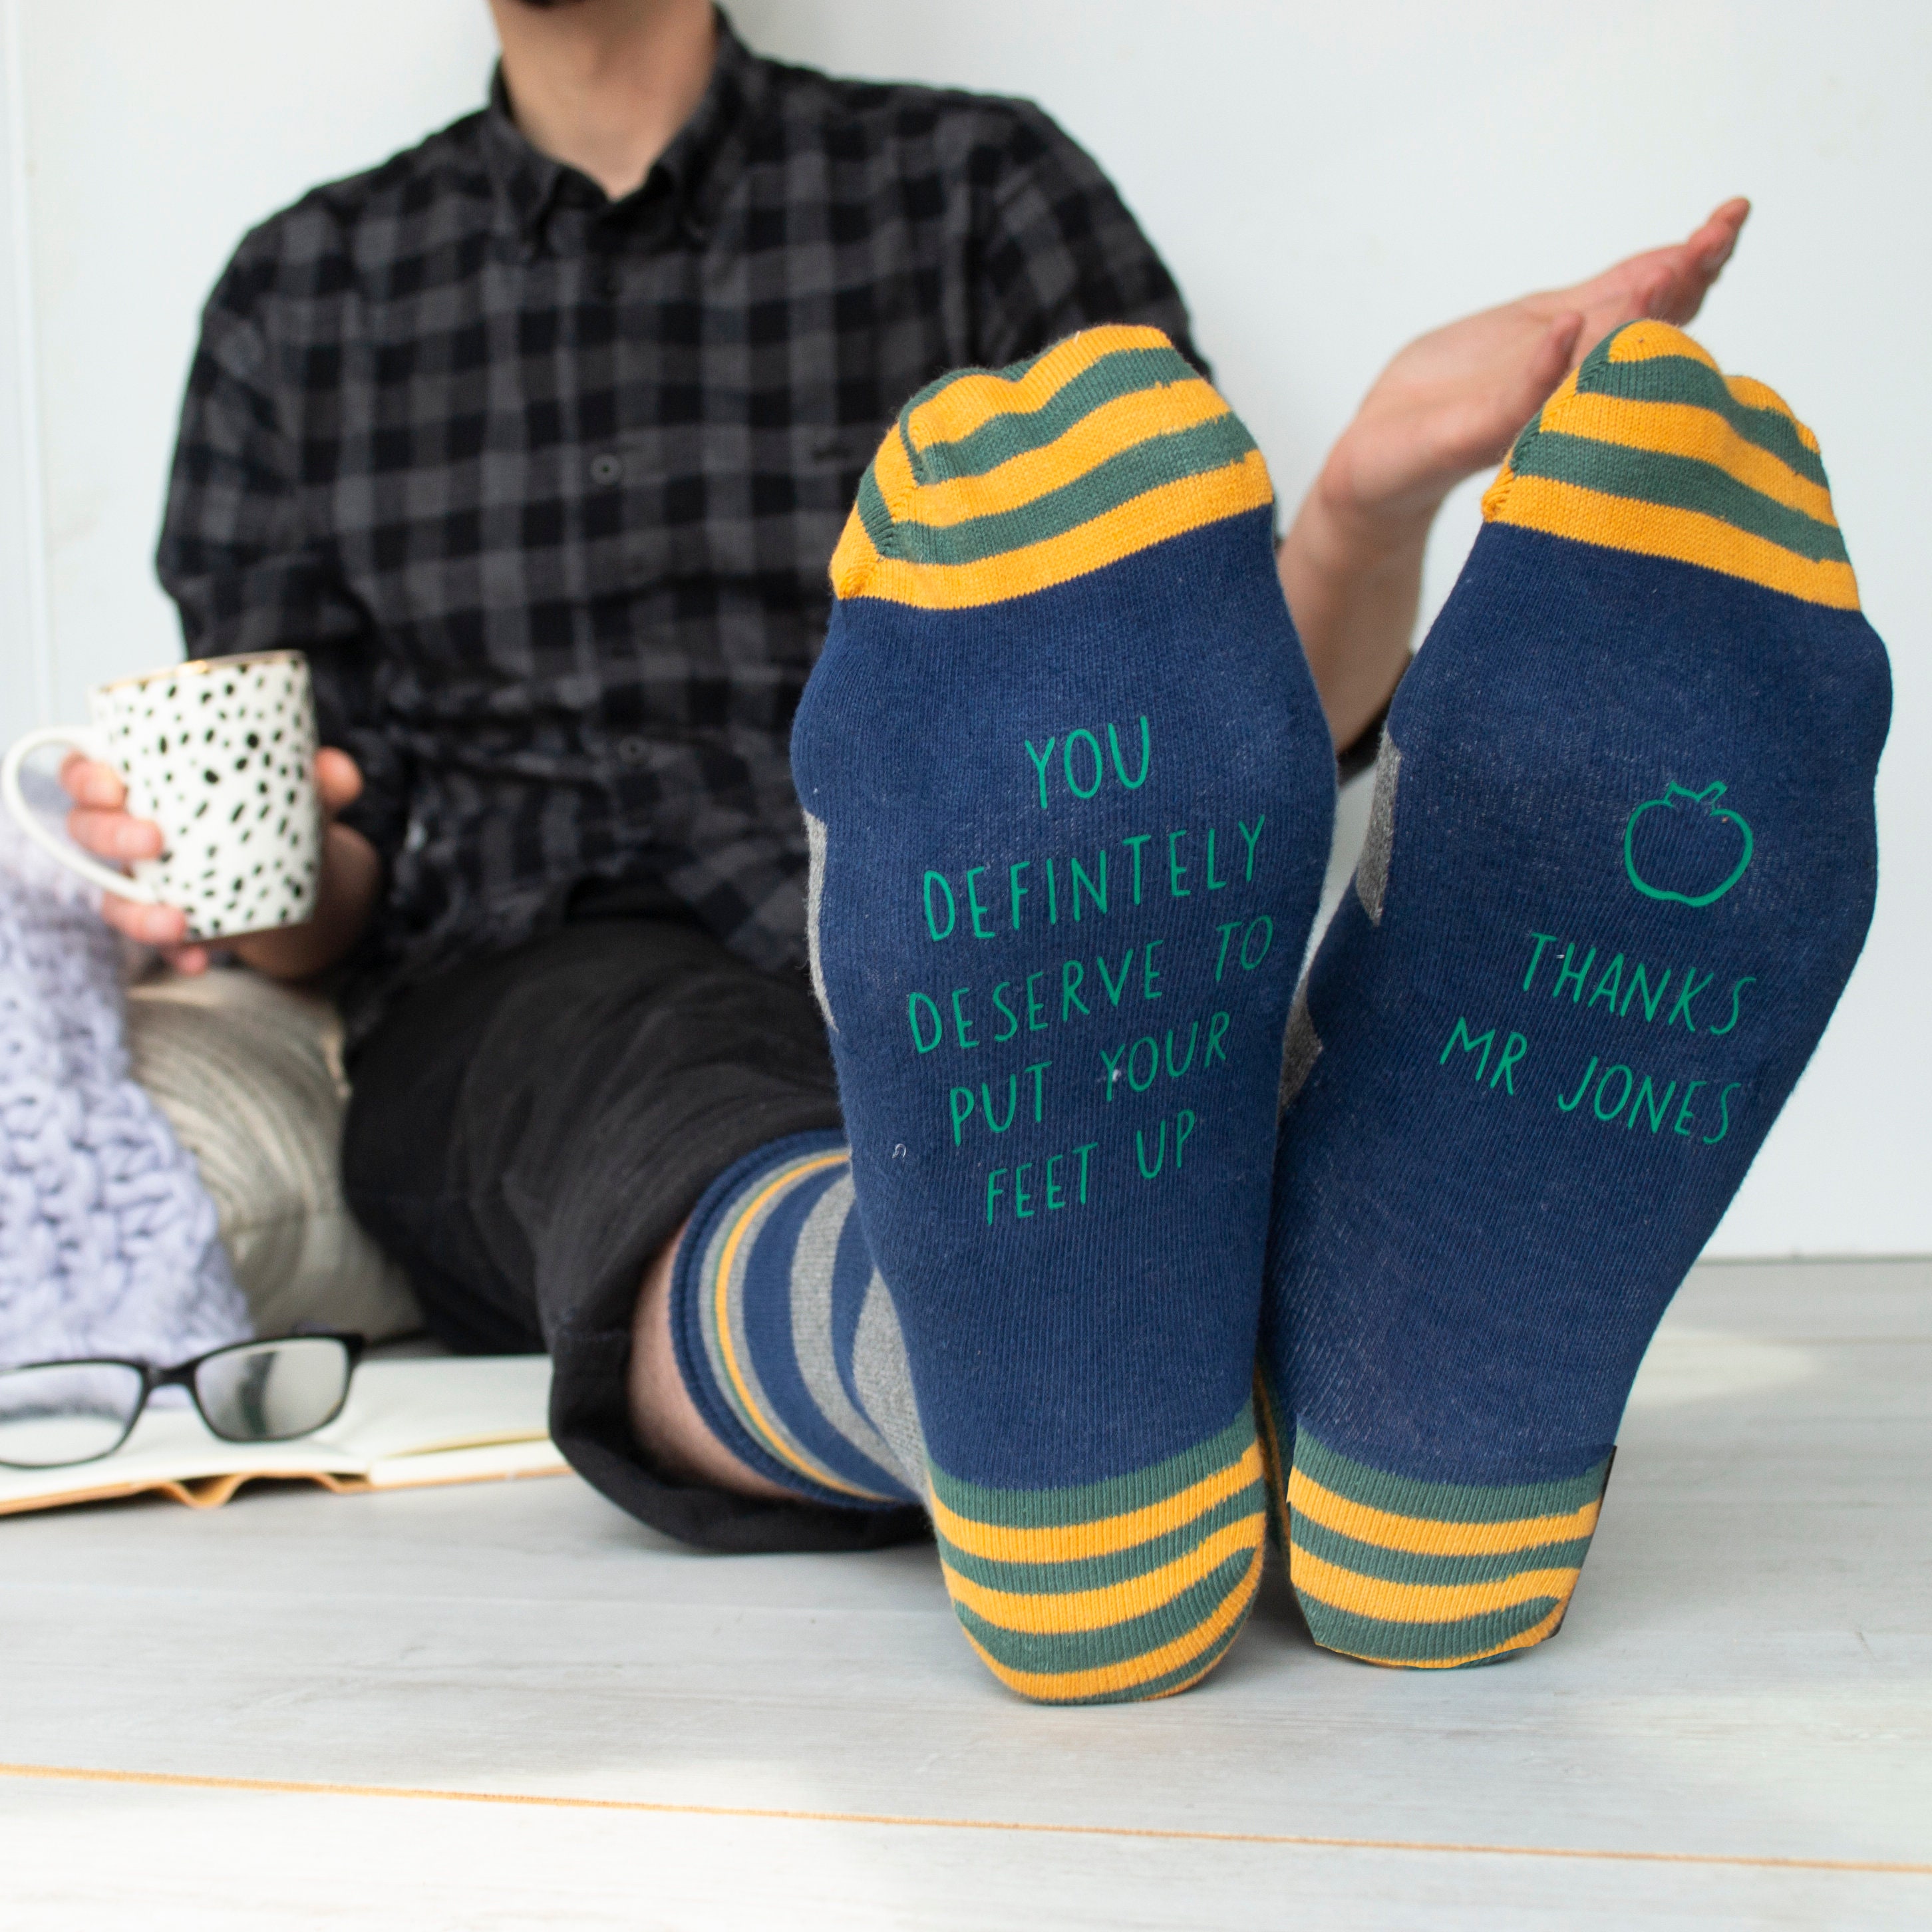 Put Your Feet up Personalised Patterned Teacher Socks - Etsy UK